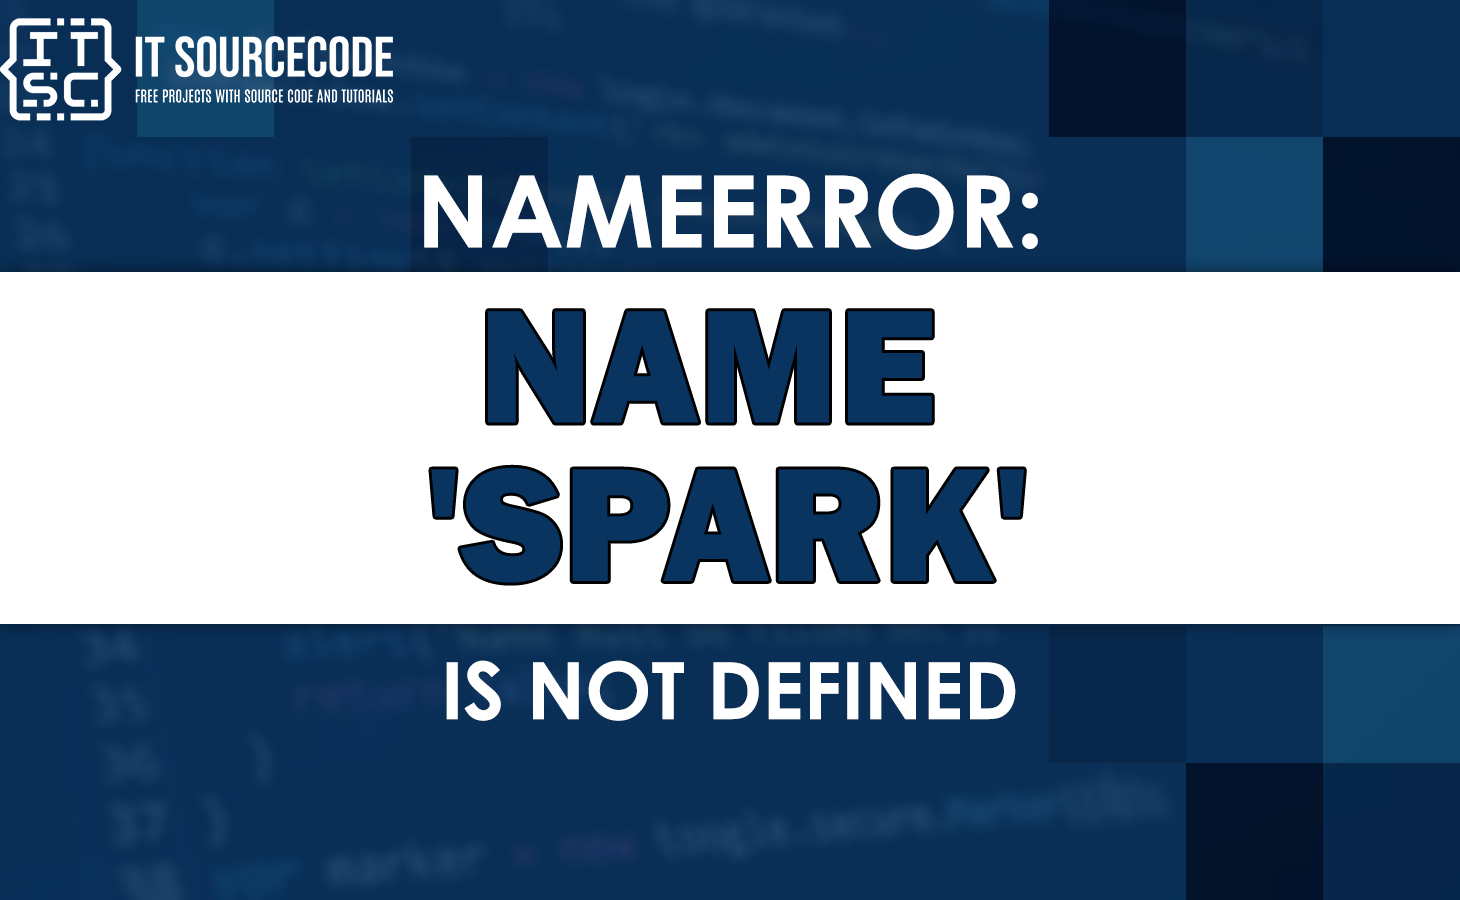 nameerror: name 'spark' is not defined